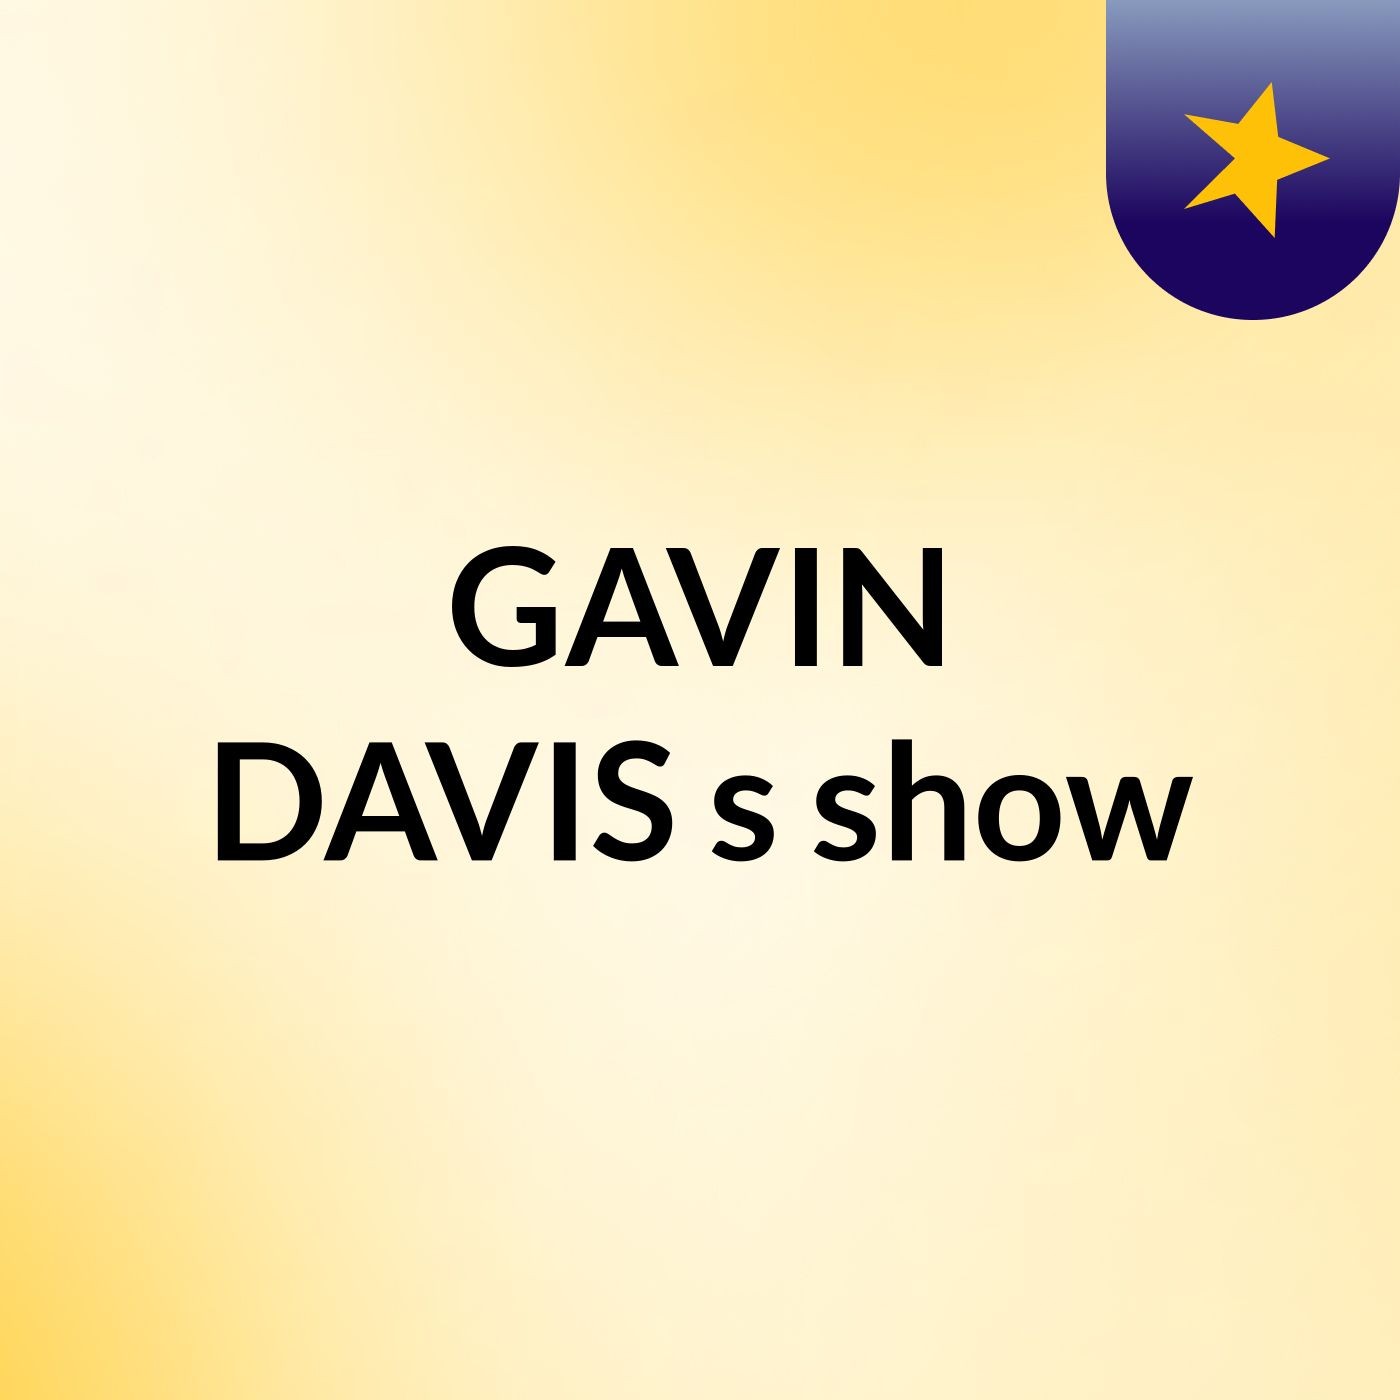 Episode 2 - GAVIN DAVIS's show